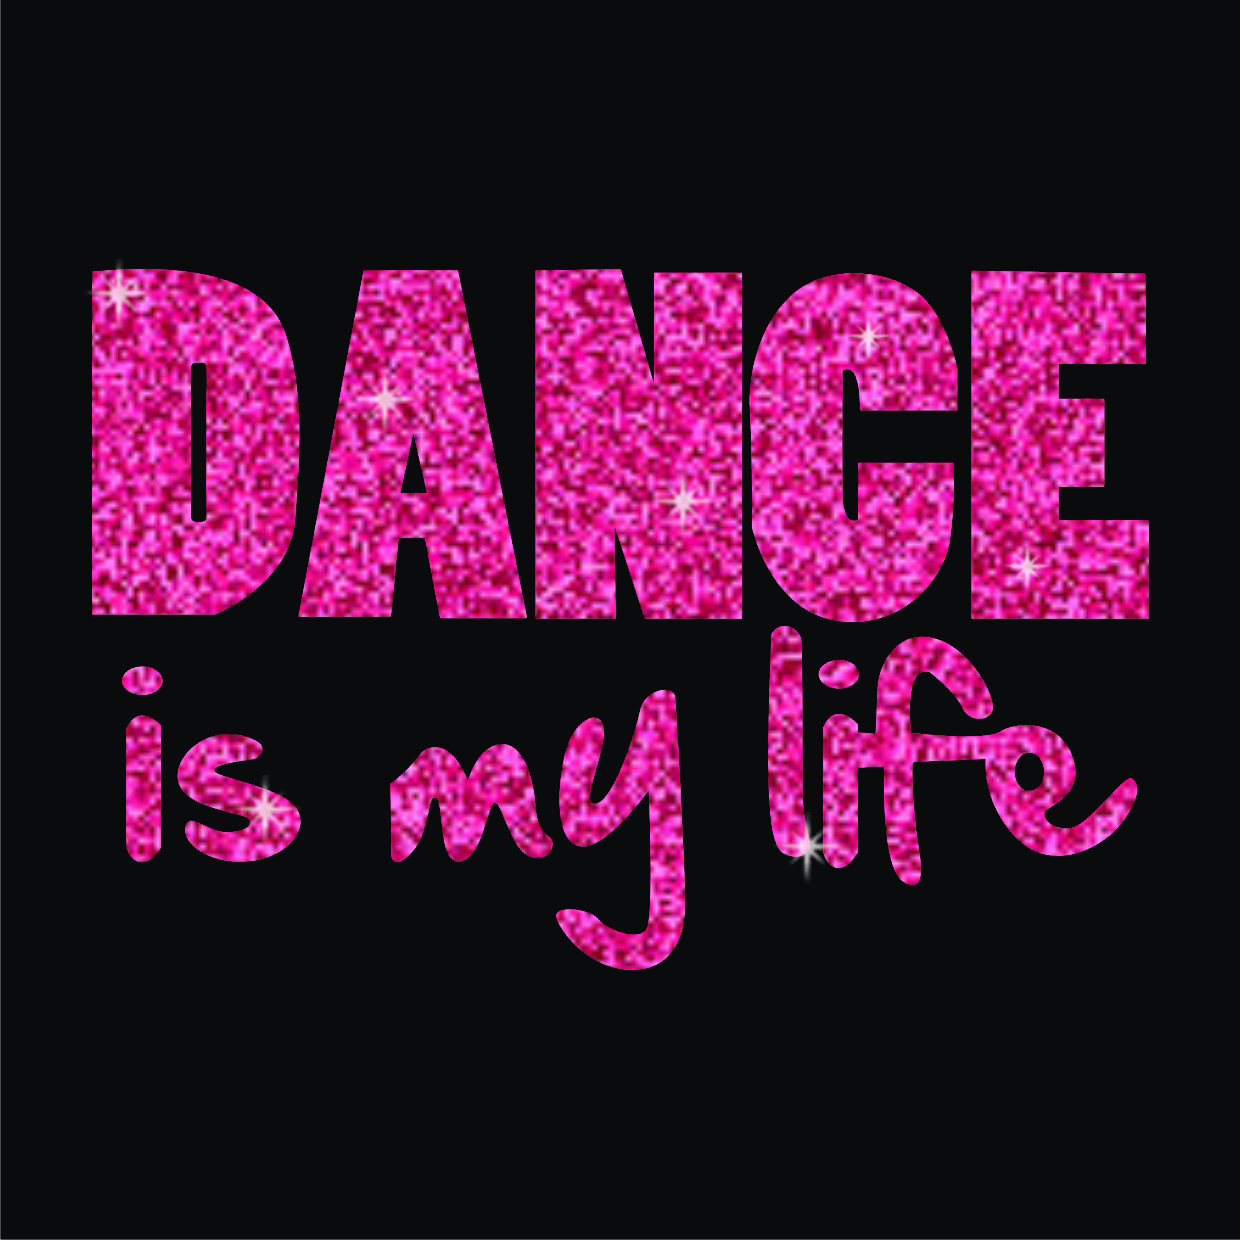 dance is my life